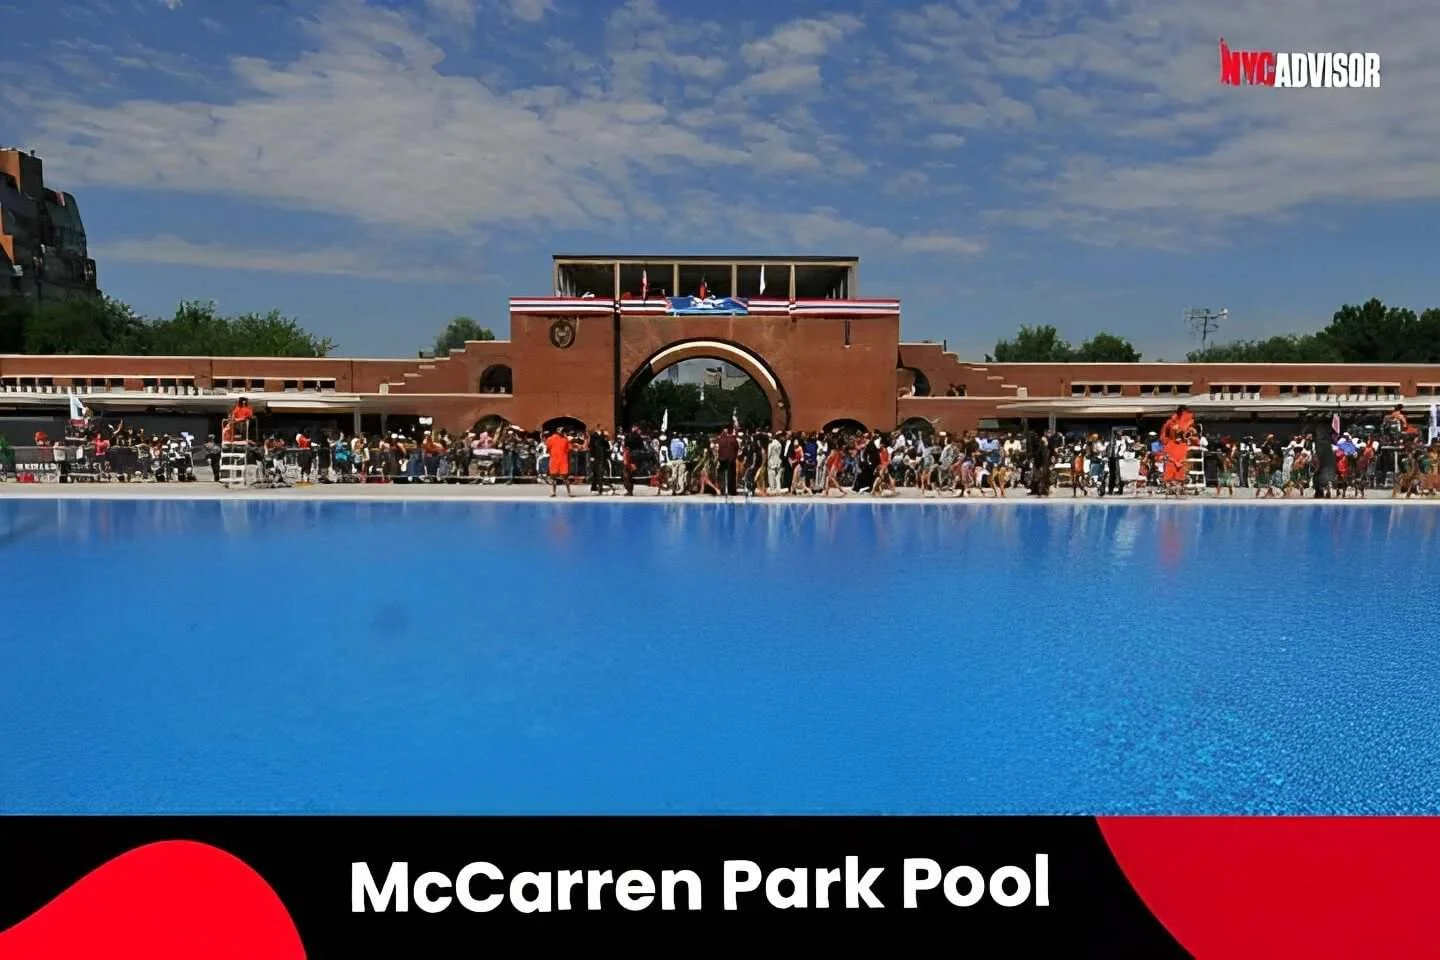 McCarren Park Pool in NYC